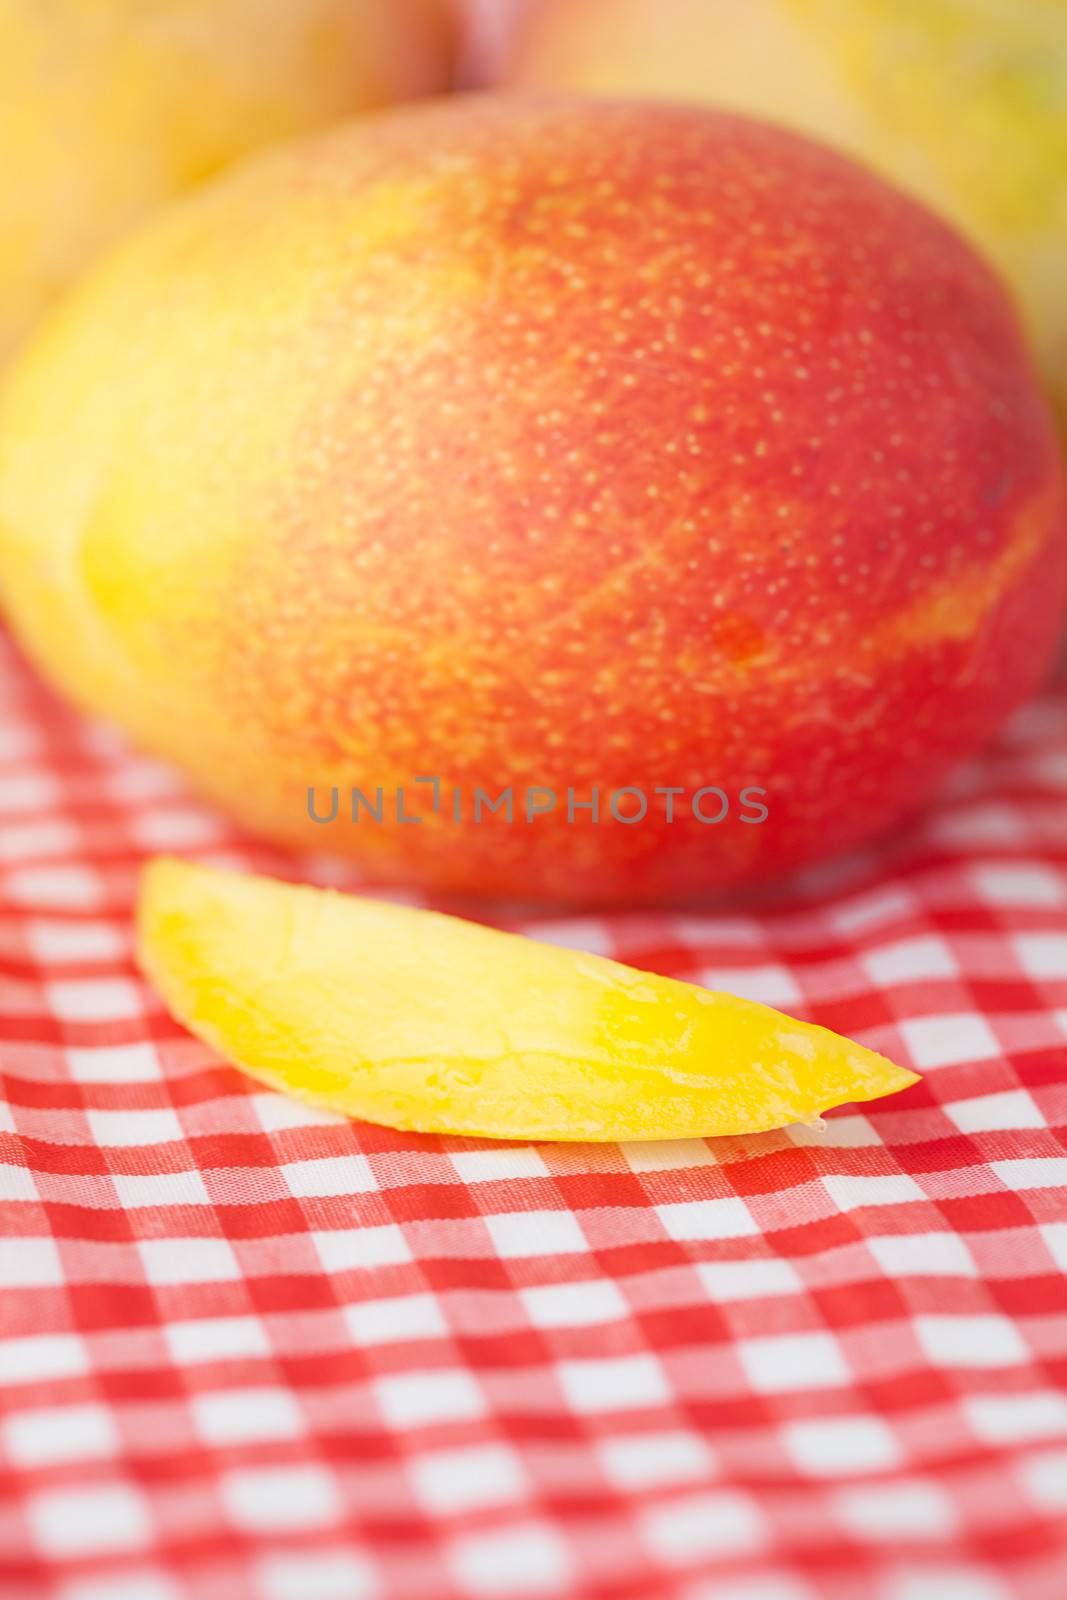 mango fruit on checkered fabric by jannyjus